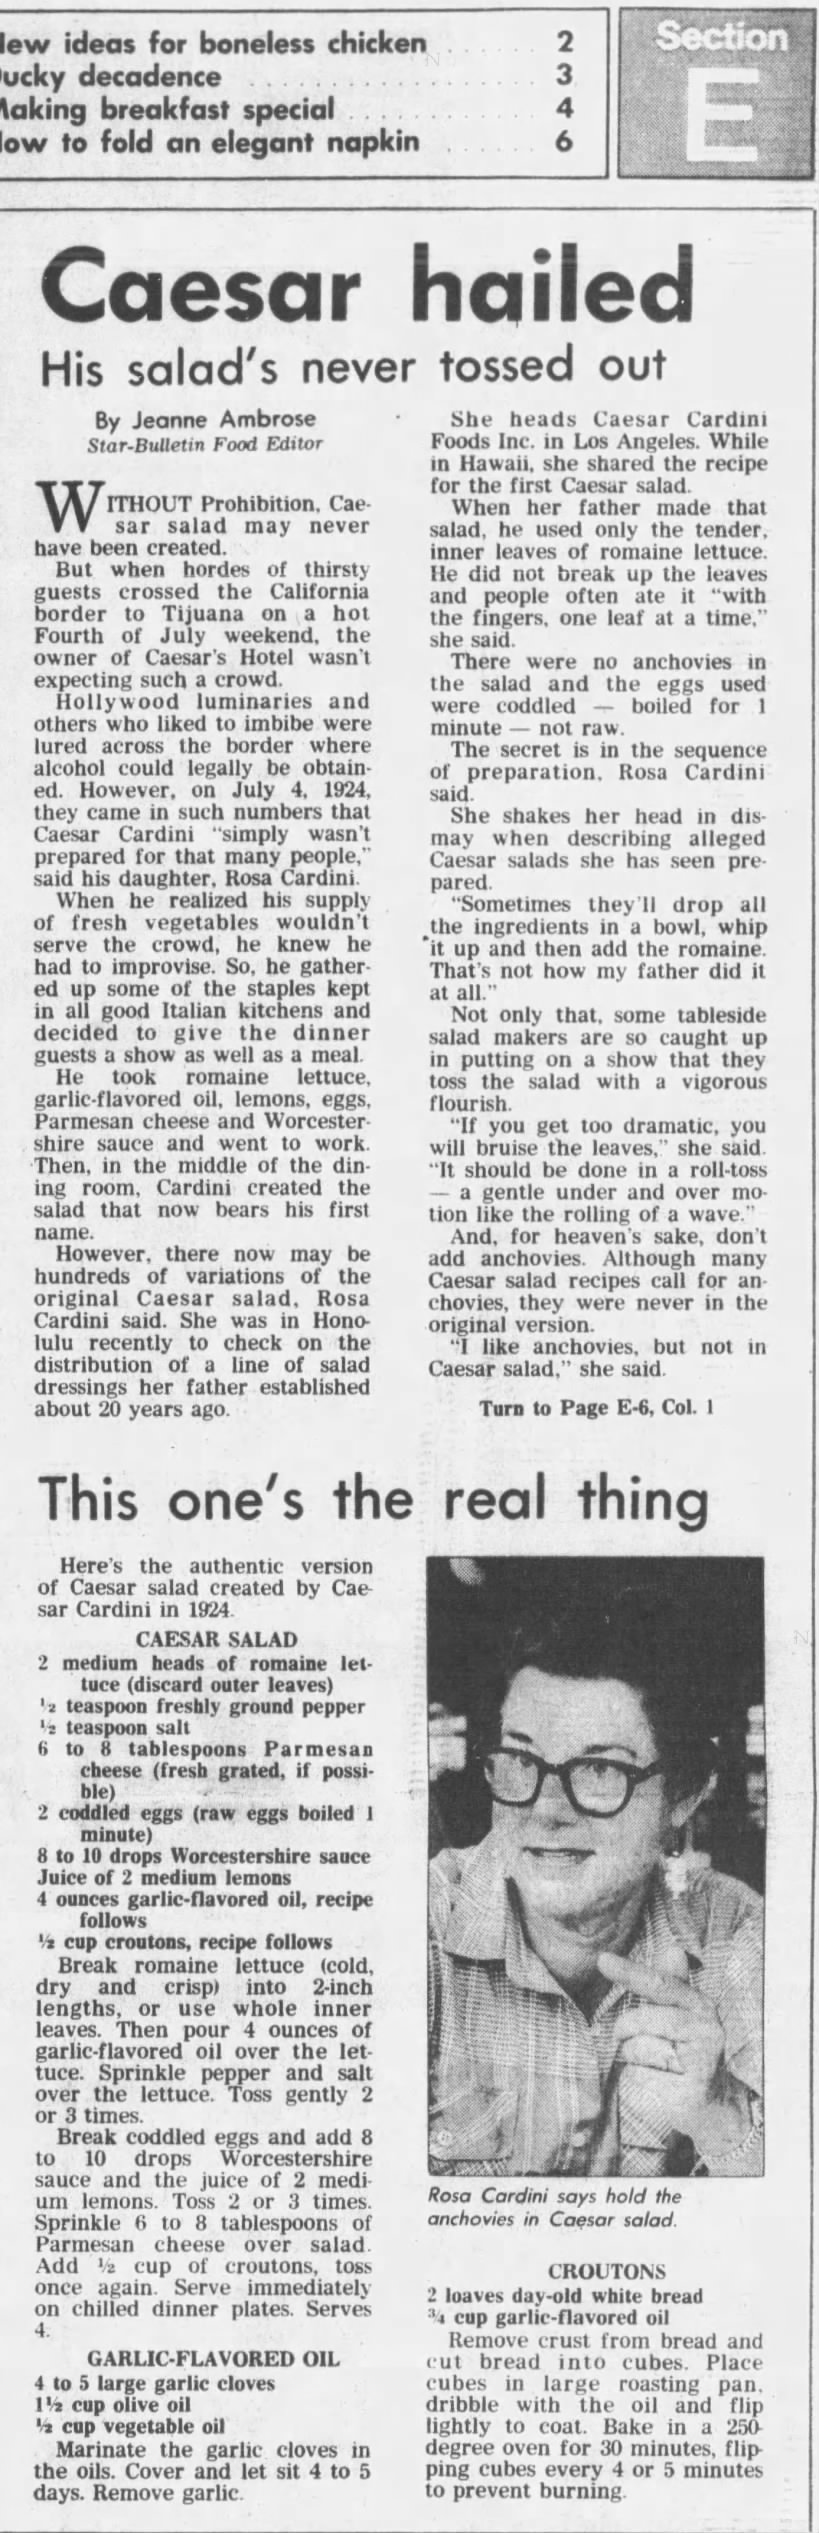 Rosa Cardini, Caesar Salad by Jeanne Ambrose, Honolulu Star-Bulletin, June 3, 1987